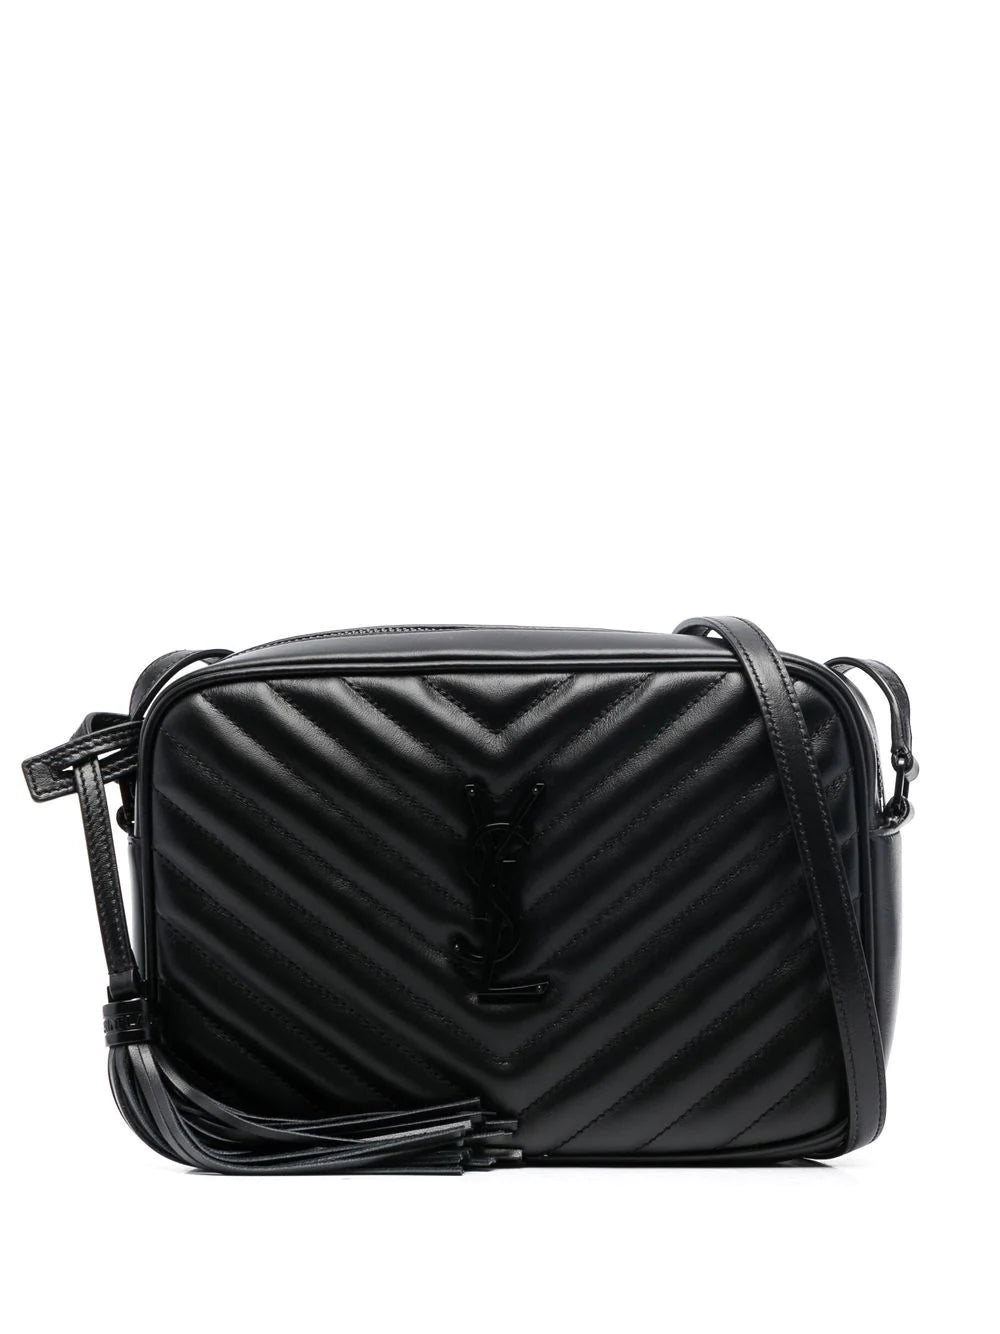 Saint Laurent Lou Monogram Leather Camera Bag in Black